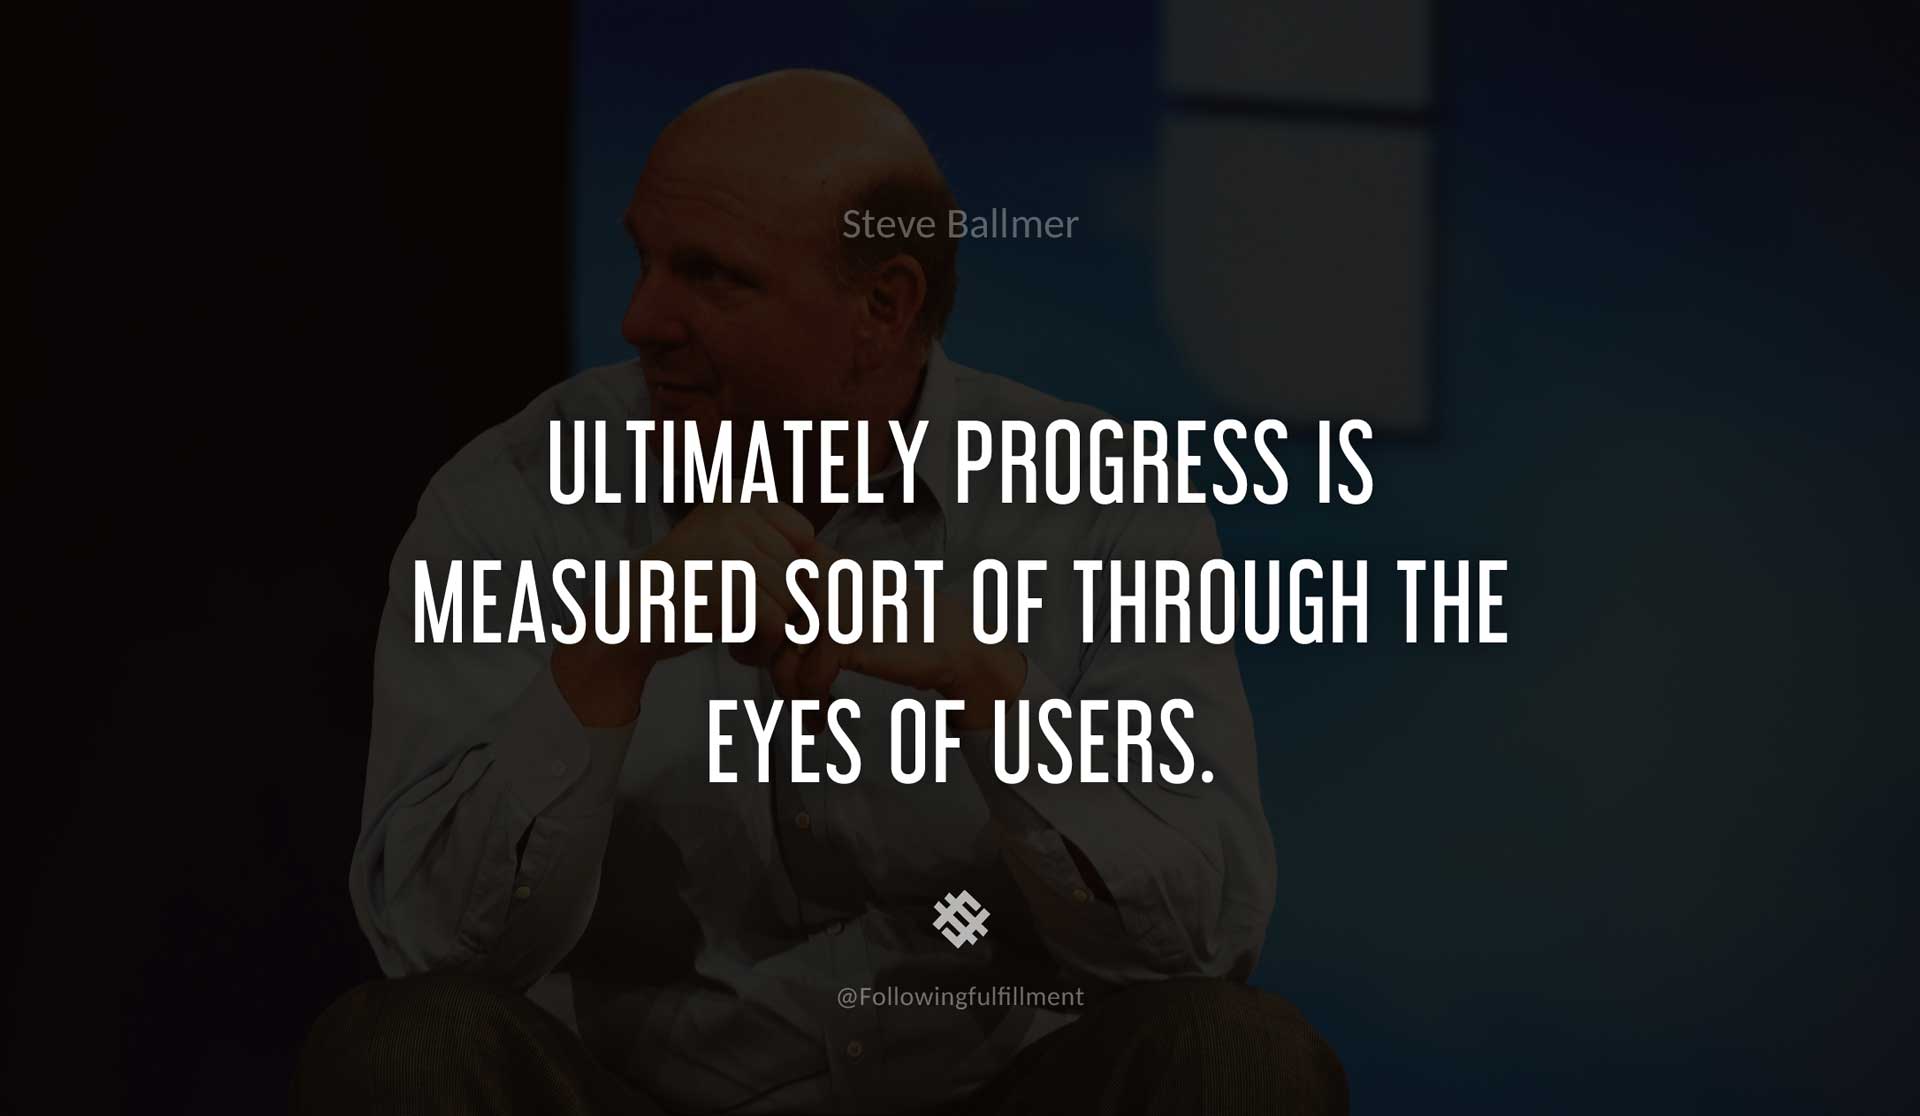 Ultimately-progress-is-measured-sort-of-through-the-eyes-of-users.-STEVE-BALLMER-Quote.jpg